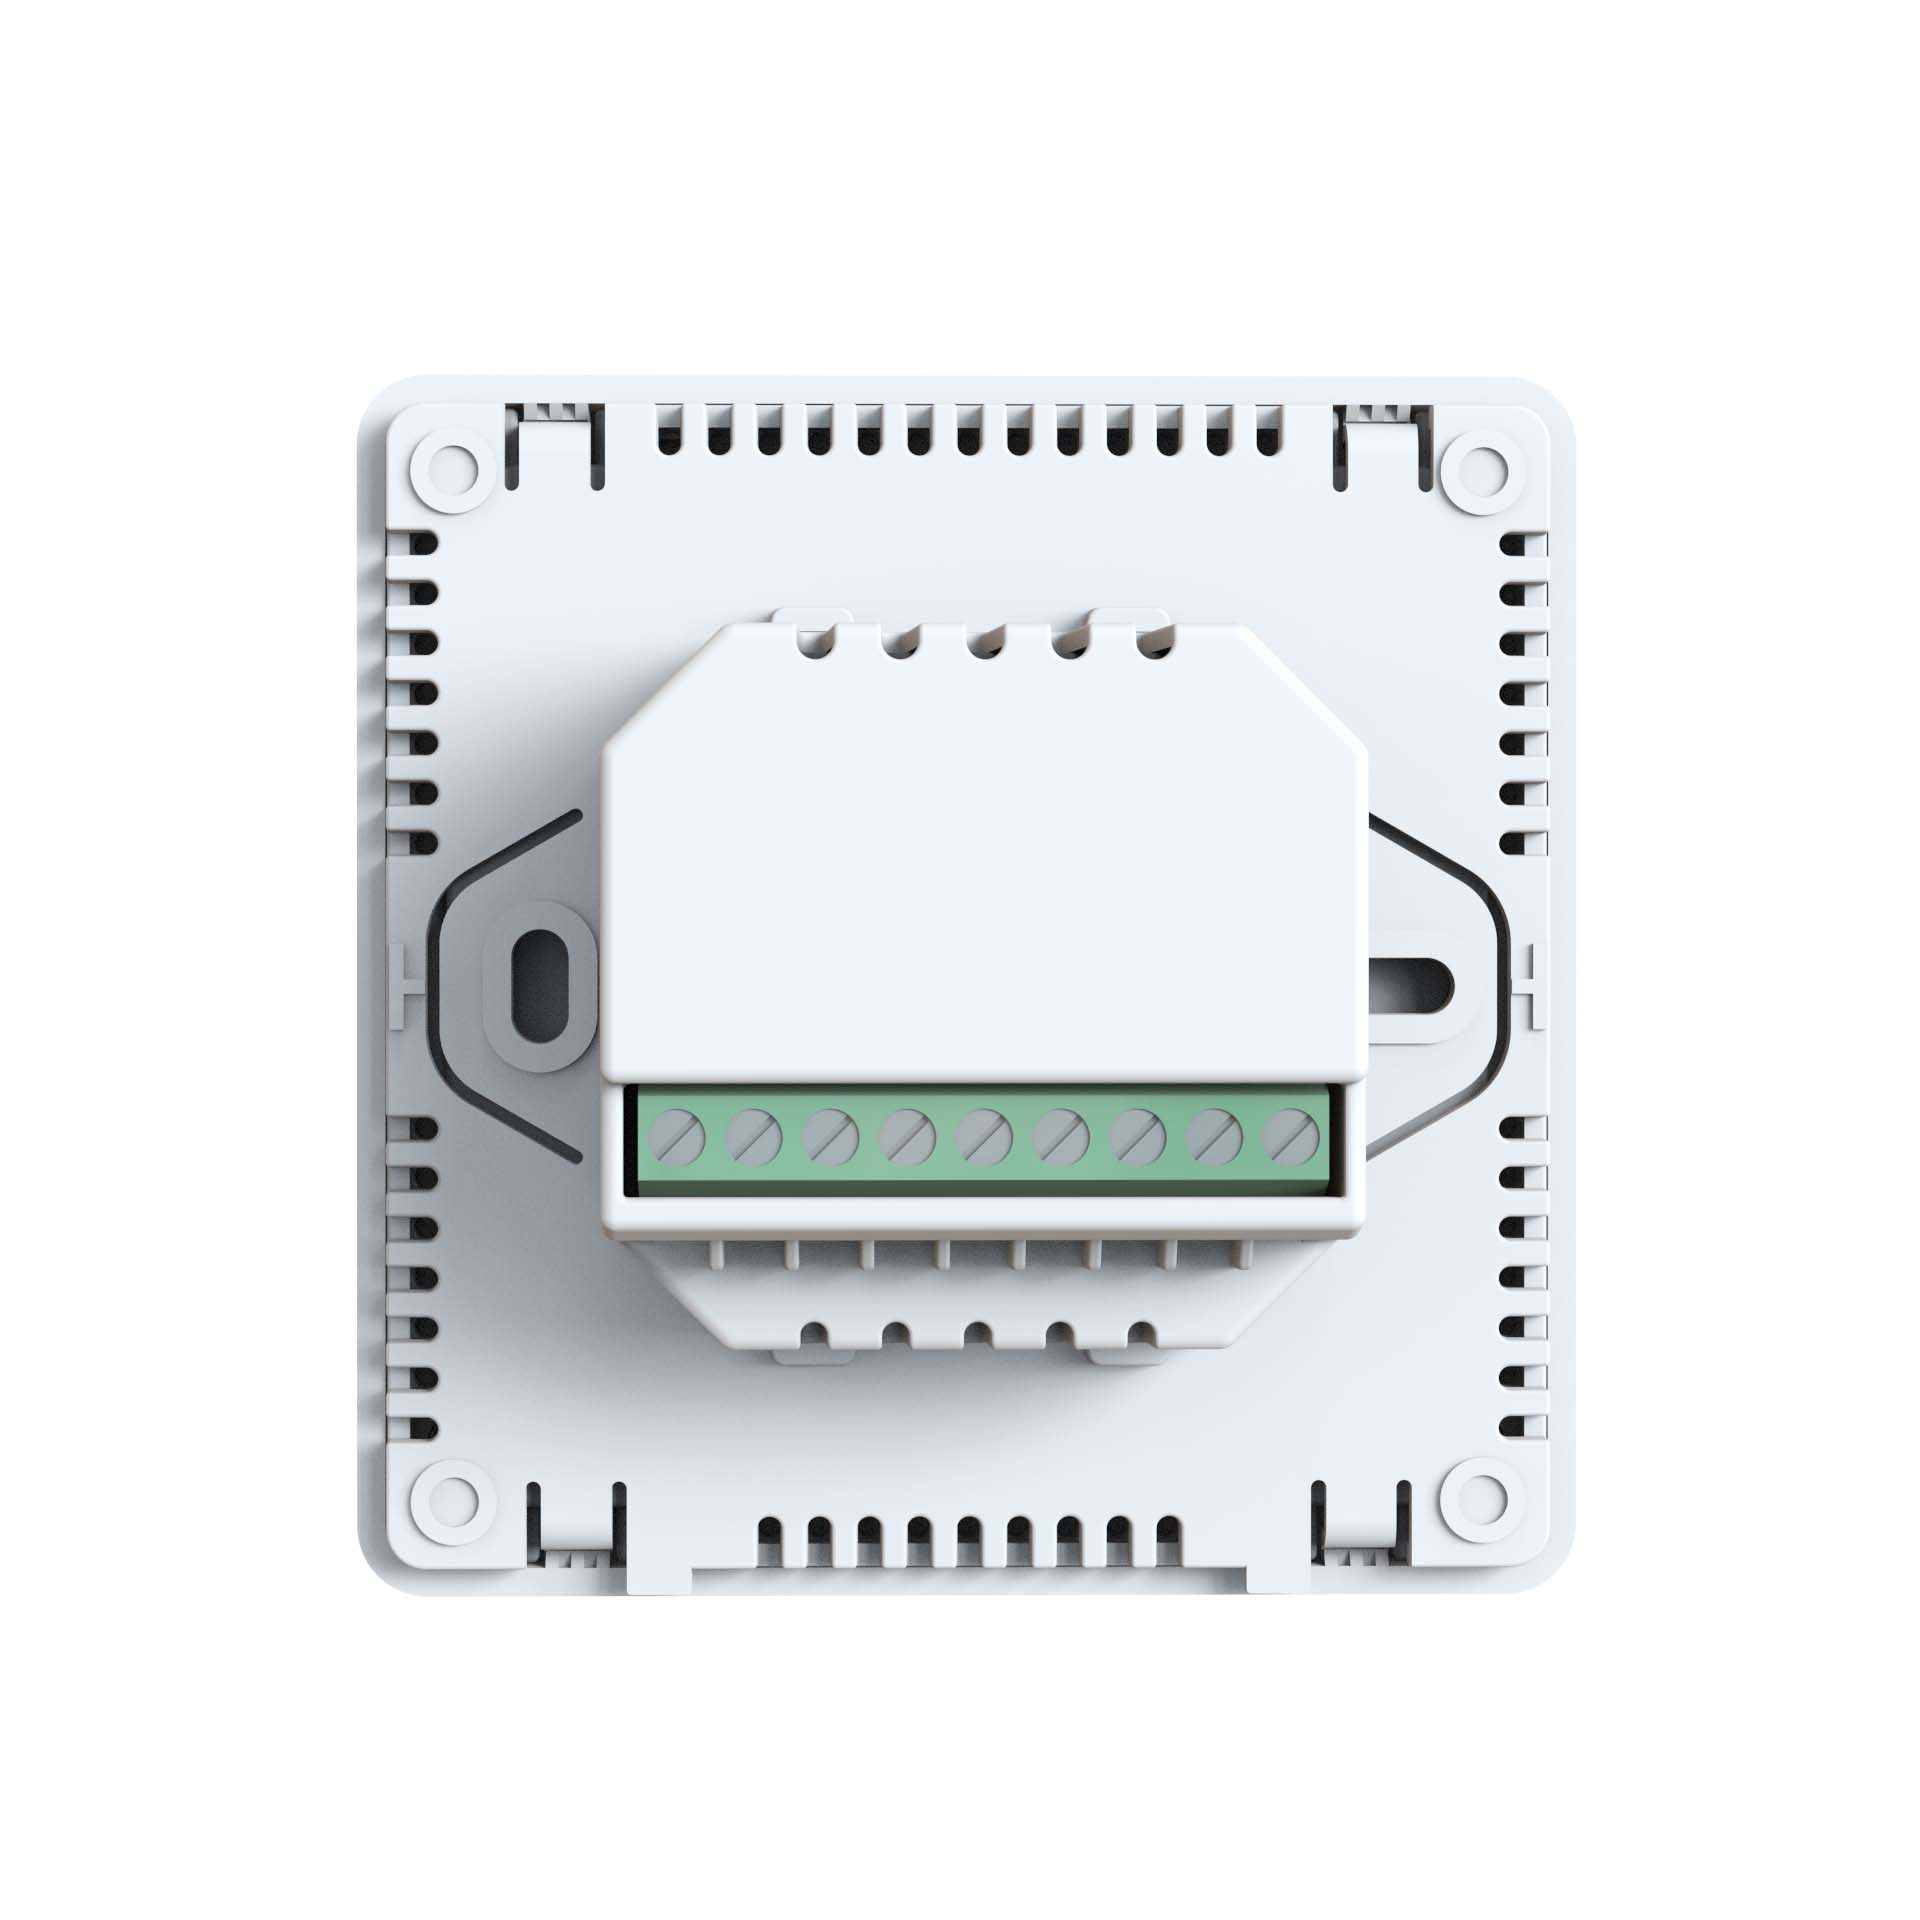 HVAC Thermostat With RS485 Modbus, Keycard, External Sensor,Child Lock